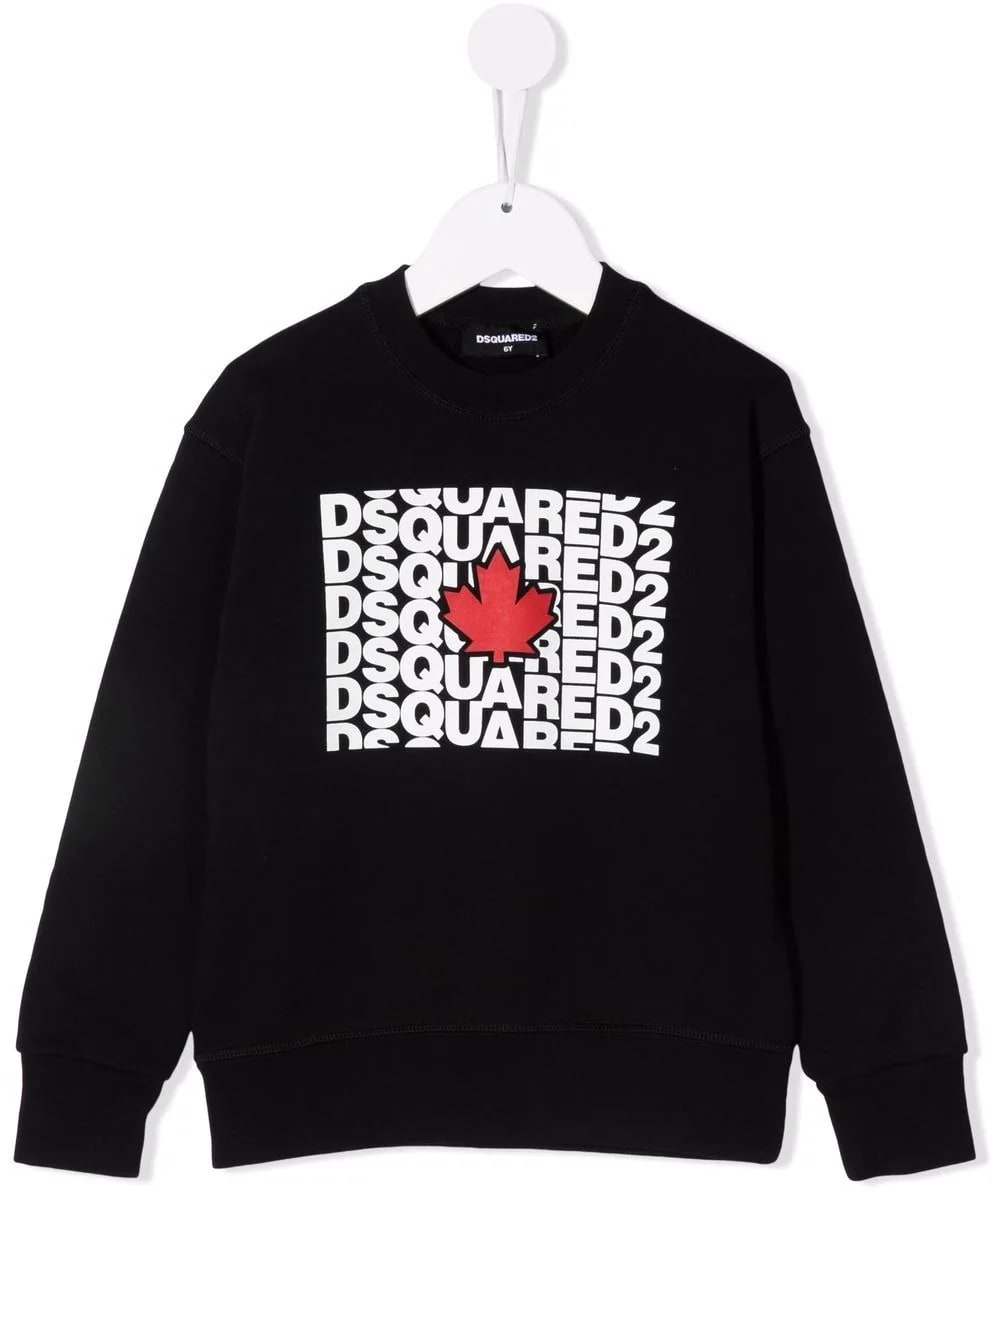 Kids Black Sweatshirt With Dsquared2 Rectangular Print With Maple Leaf